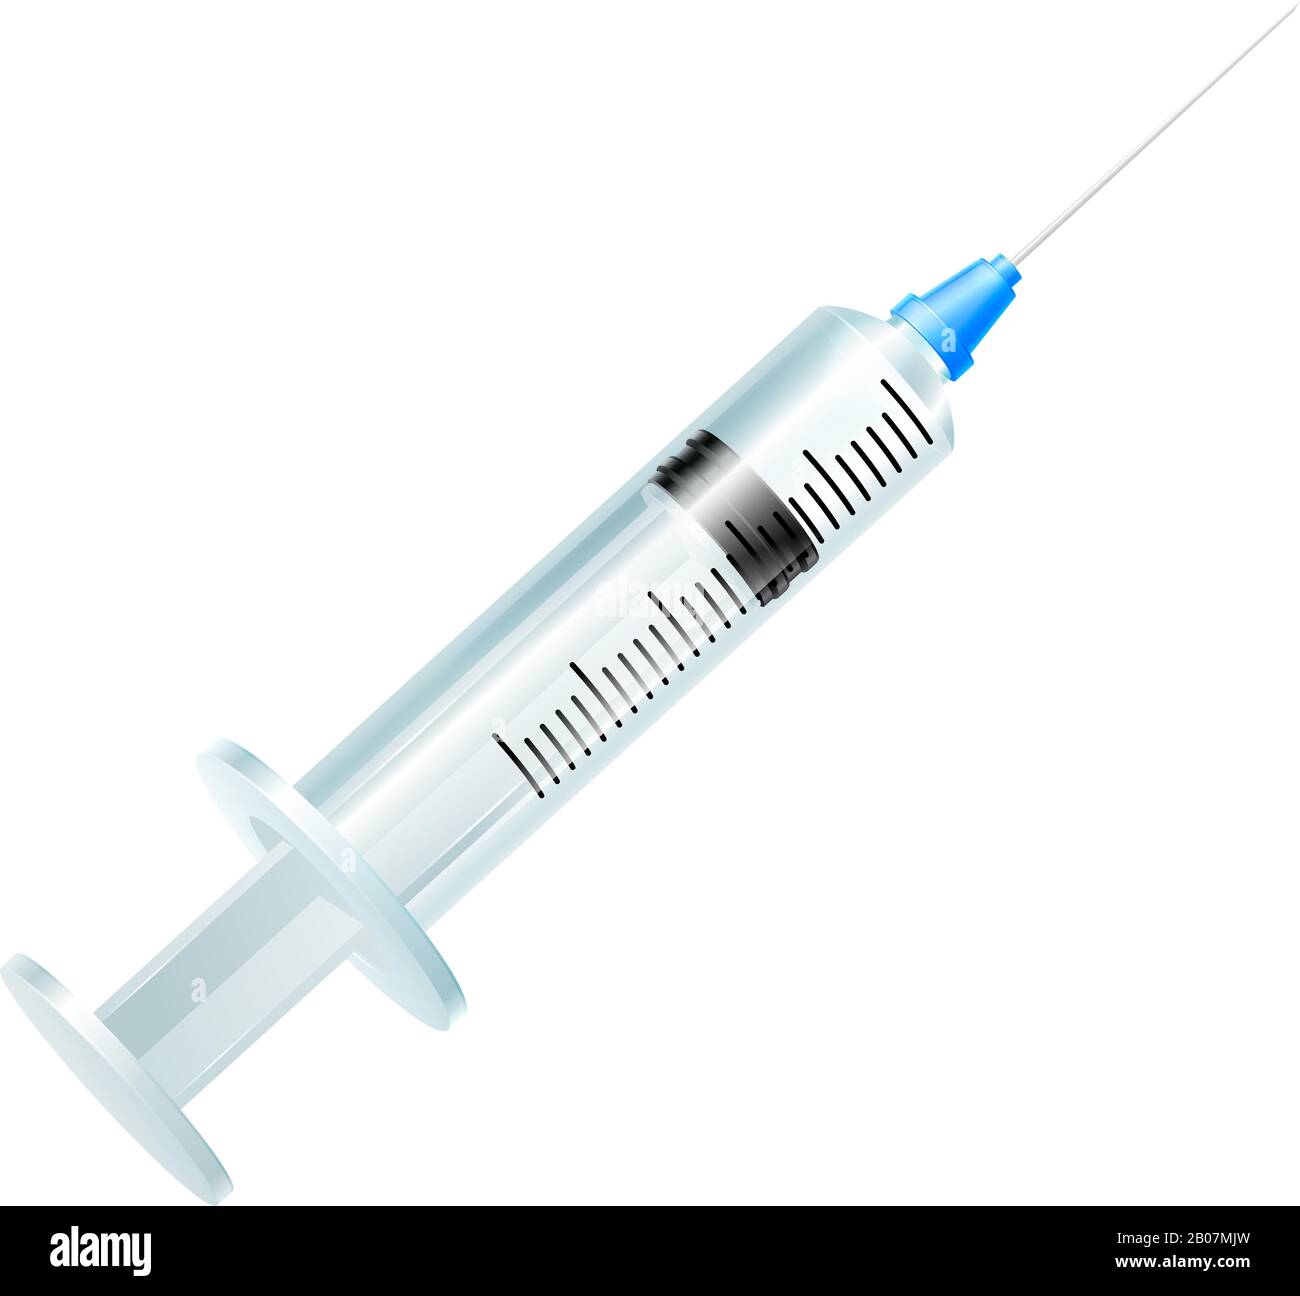 Medical Injection Needle Syringe Stock Vector